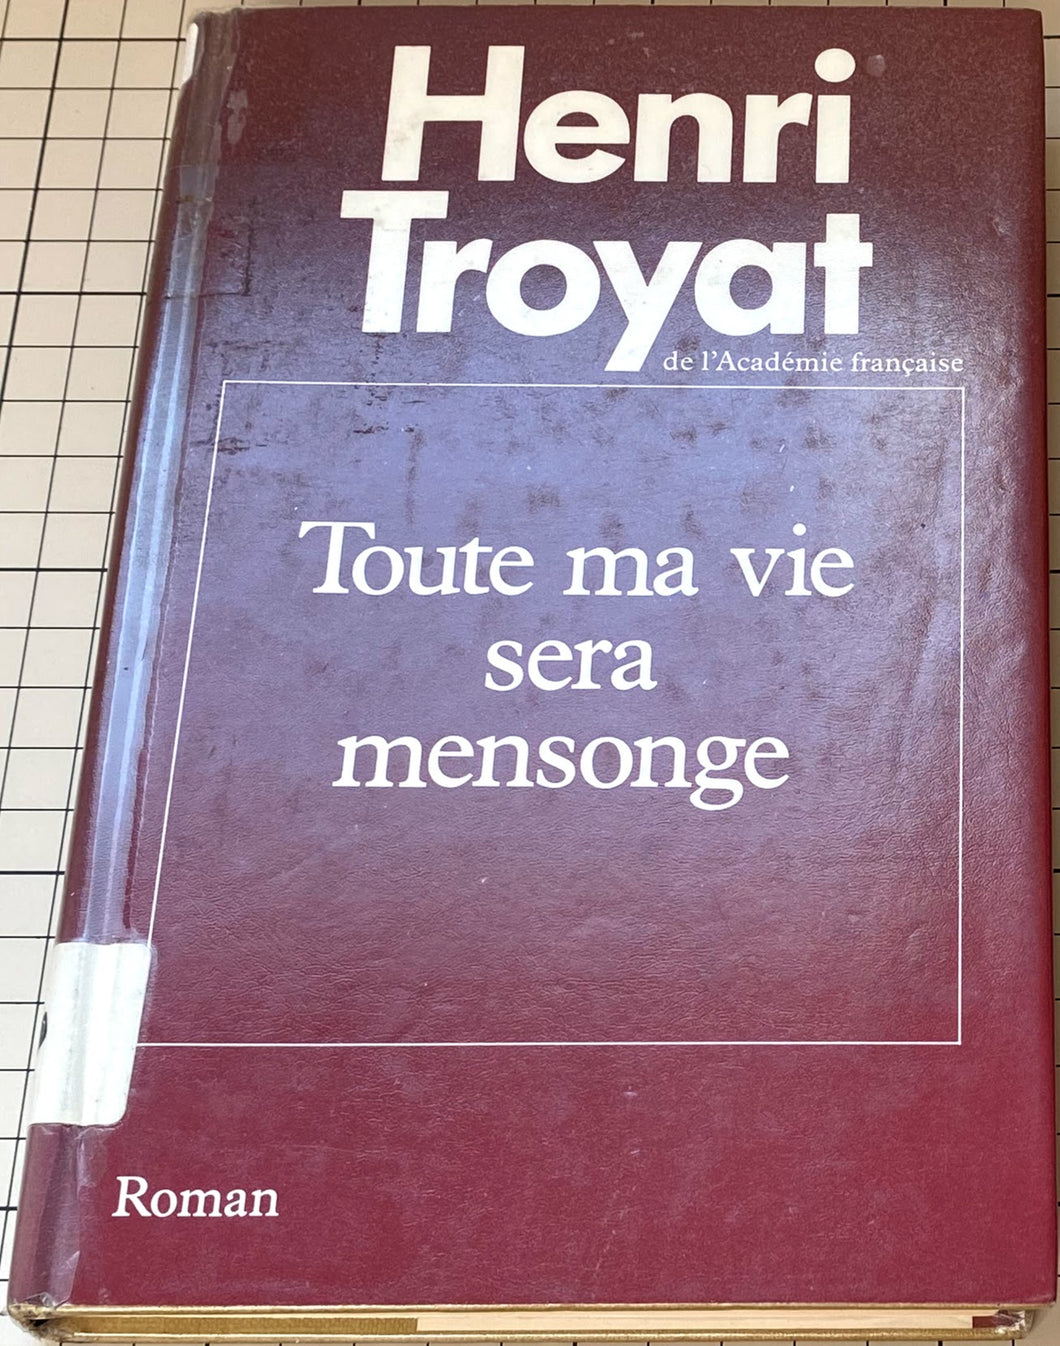 Toute ma vie sera mensonge : Henri Troyat